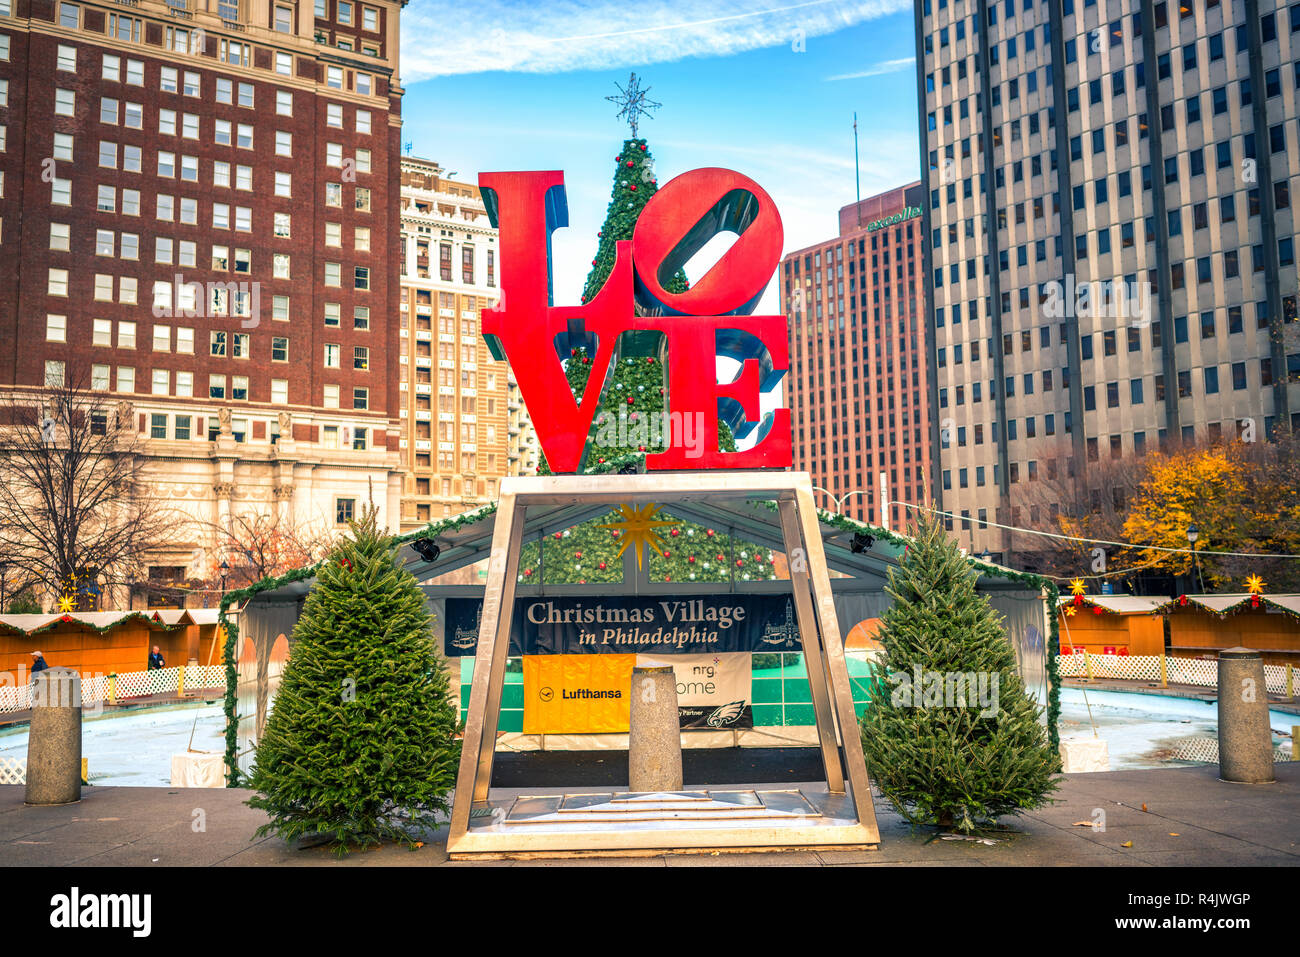 PHILADELPHIA - NOVEMBER, 30: Love Park named after the Love statue in Philadelphia, USA at Christmas time, on November, 30, 2015. The park located in Center City, Philadelphia Stock Photo